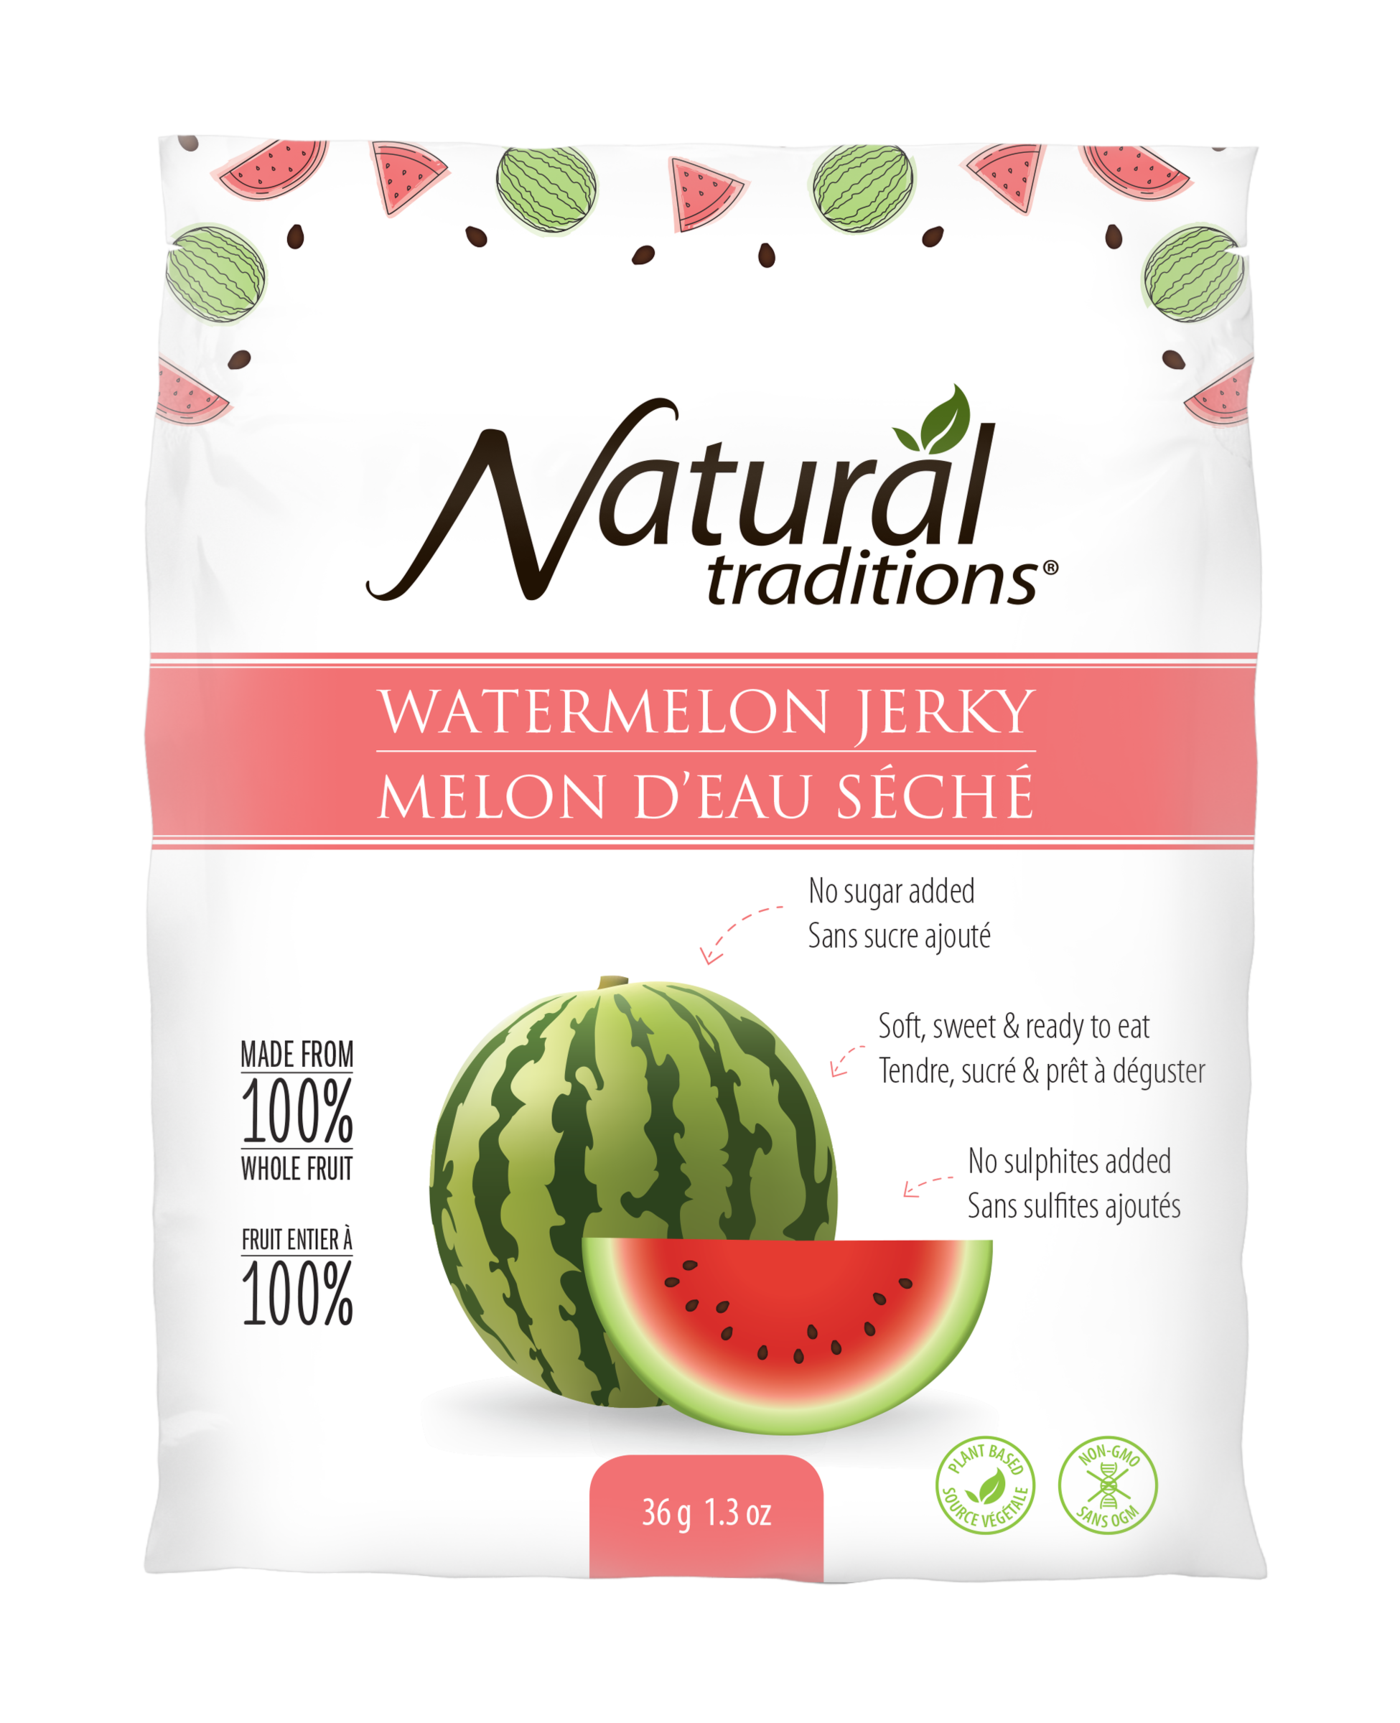 Organic Traditions Watermelon Jerky